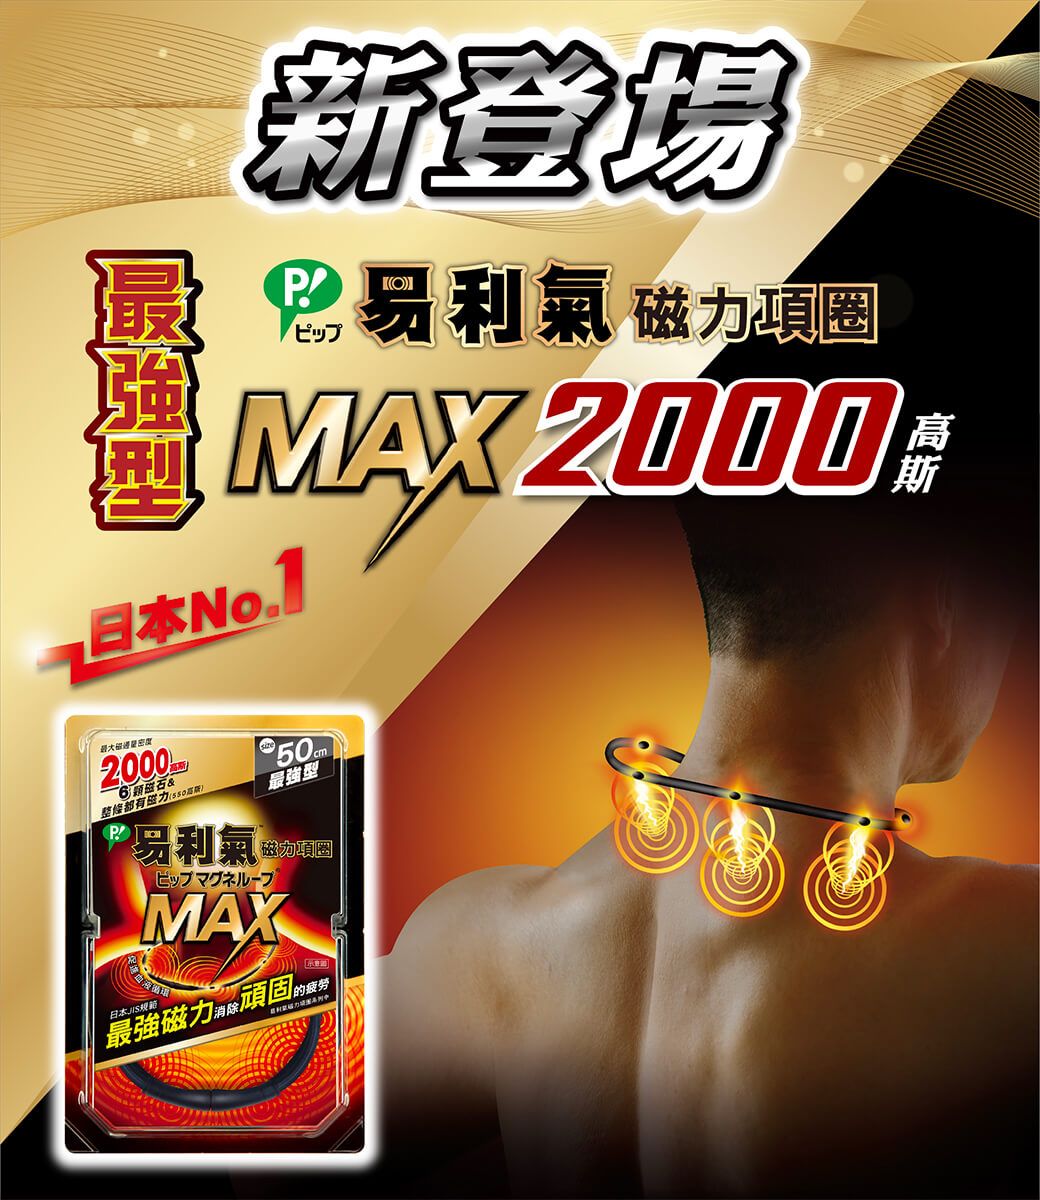 新登場利氣磁力項圈高MAX2000 日本最大密度20006磁石&整條都有磁力(P 50ml最強易利氣 型ピップマグネループMAX最強磁力消除頑固的